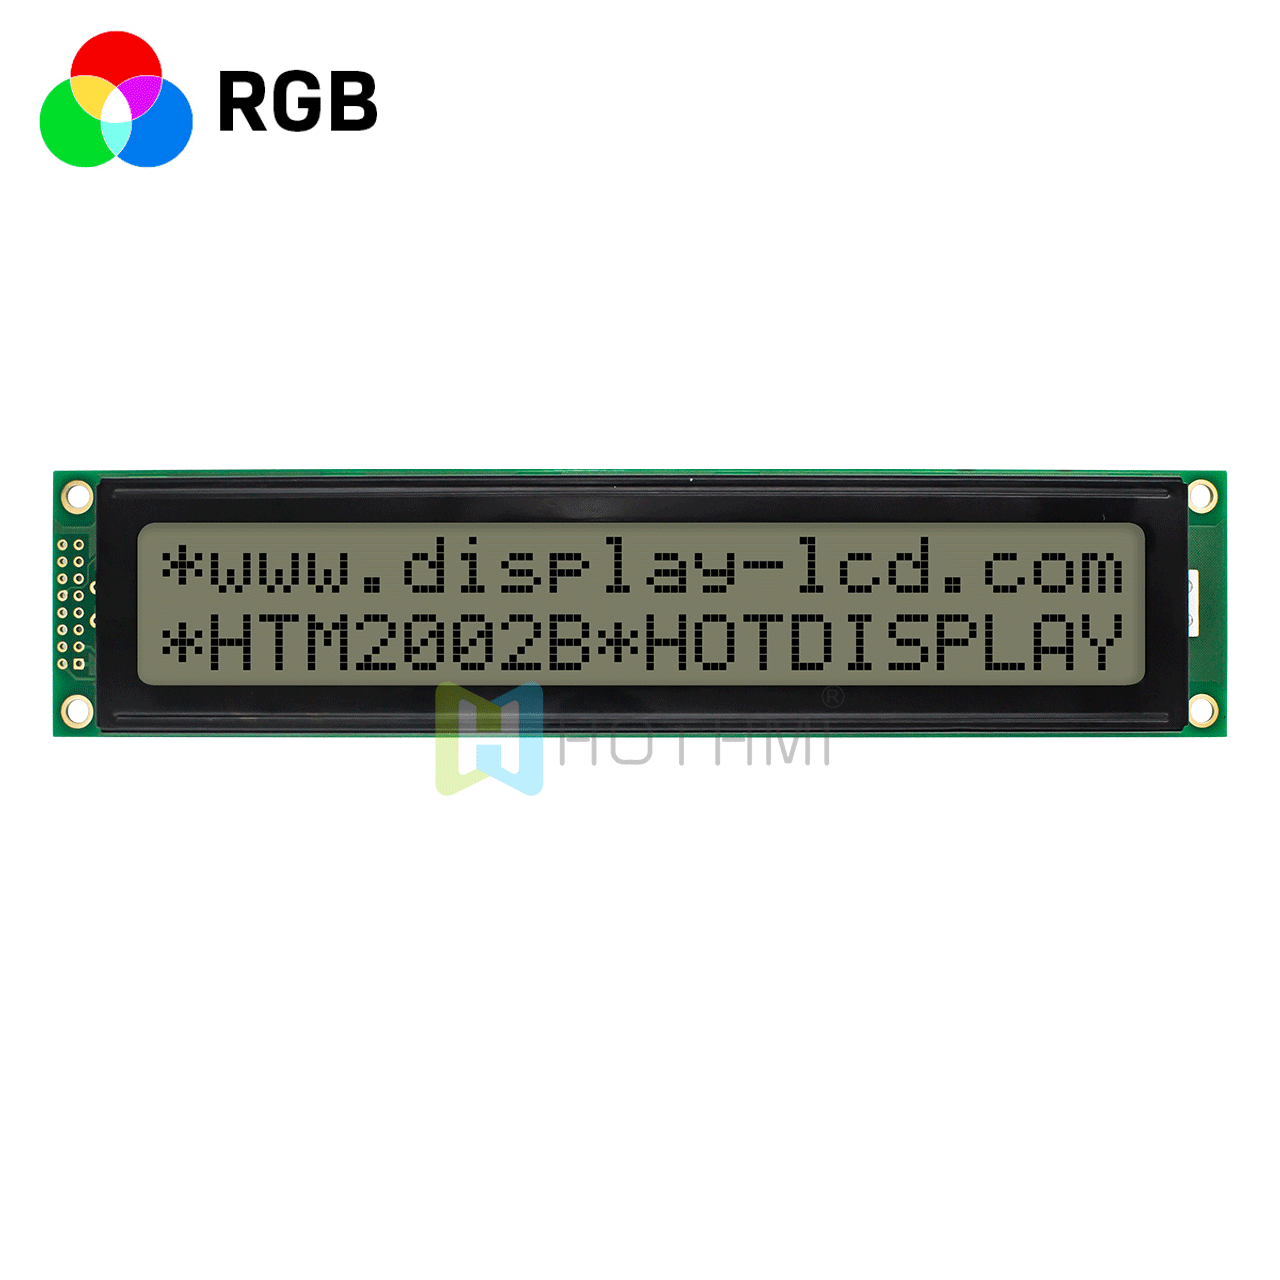 2x16 character display | transflective LCD display Module | RGB LED backlight | FSTN (+) front display | st7066u controller | 5.0V